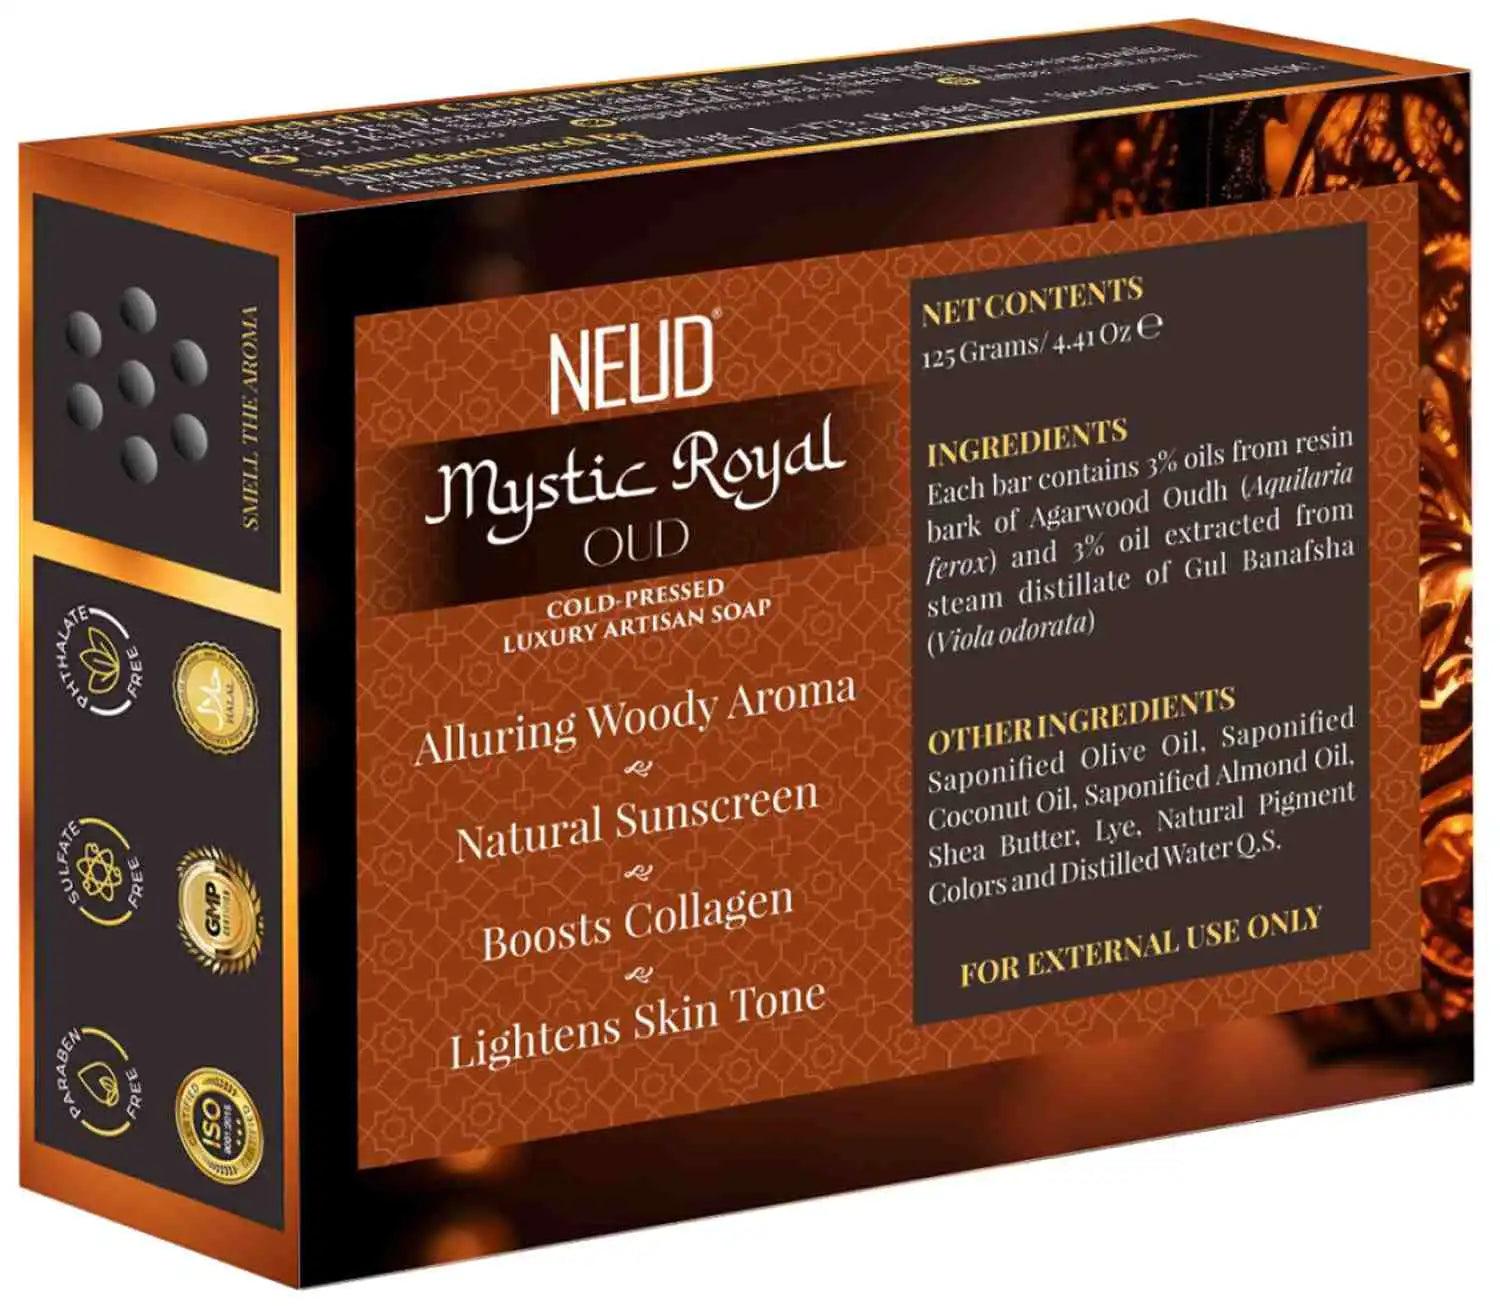 NEUD Mystic Royal Oud Luxury Artisan pH Balanced Cold-Pressed Handmade Soap 125g With Oudh and Gul Banafsha is Shipped Worldwide - everteen-neud.com